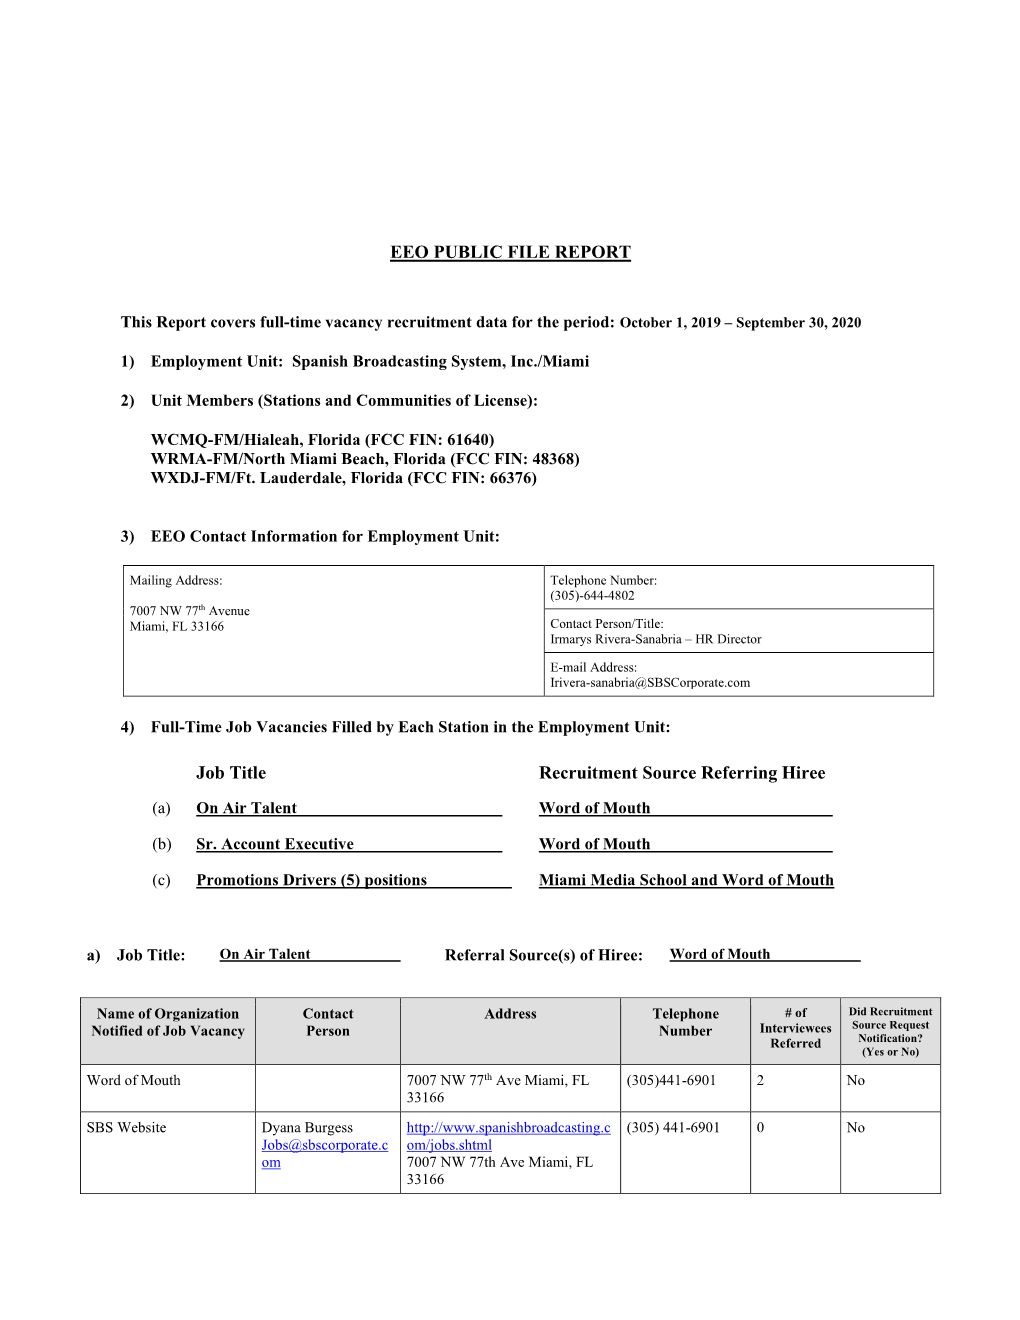 EEO PUBLIC FILE REPORT Job Title Recruitment Source Referring Hiree